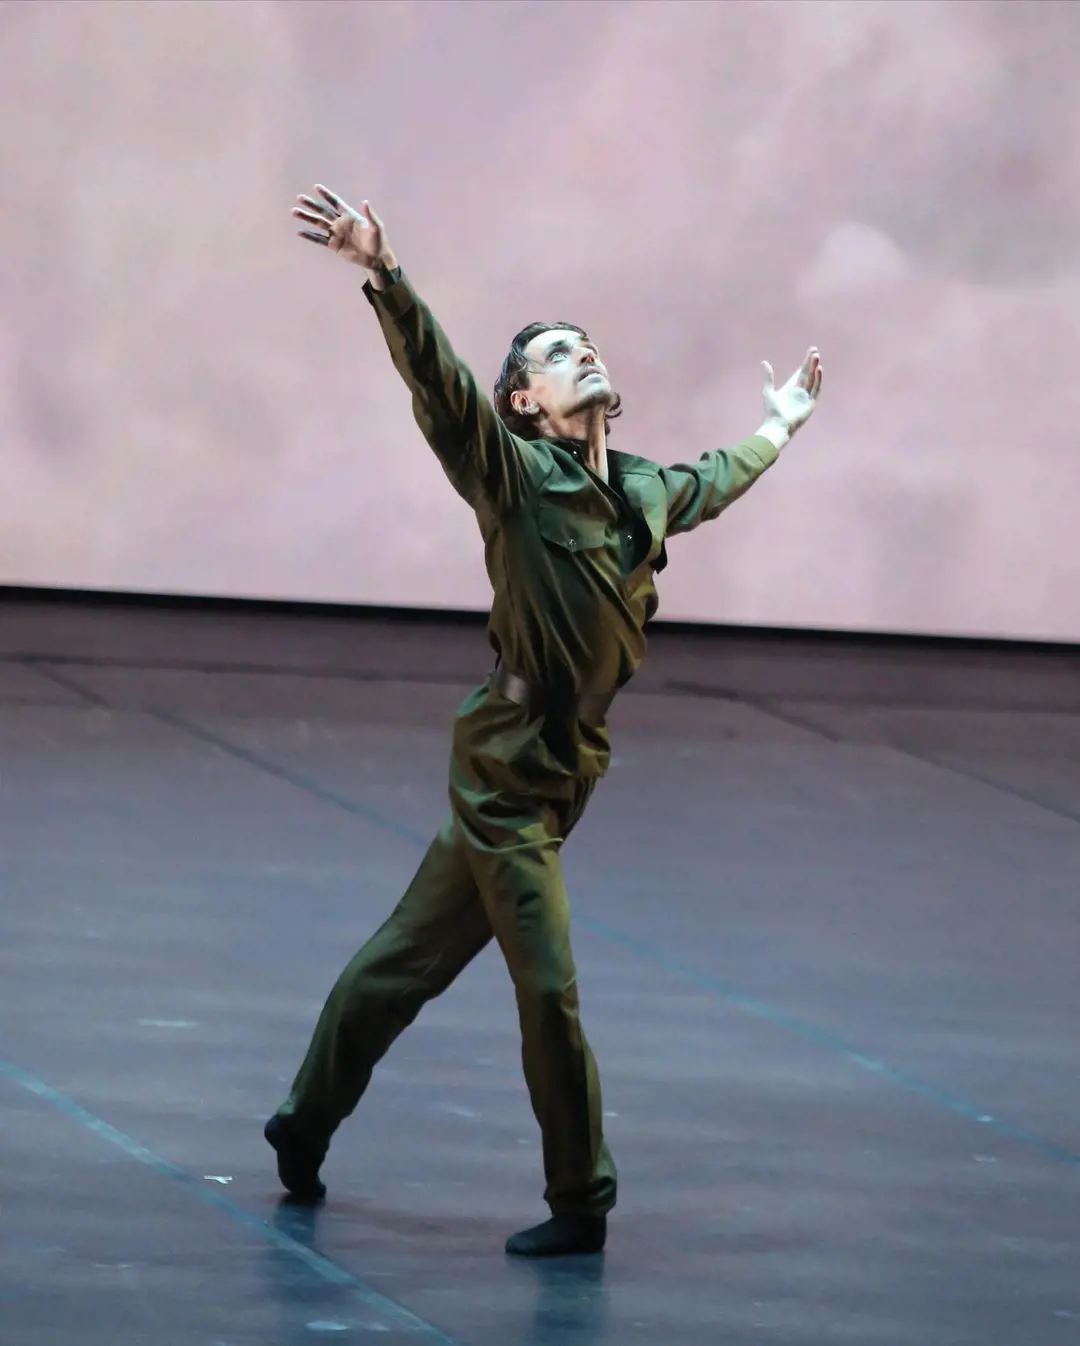 Sergei performing ballet dance in August 2022.